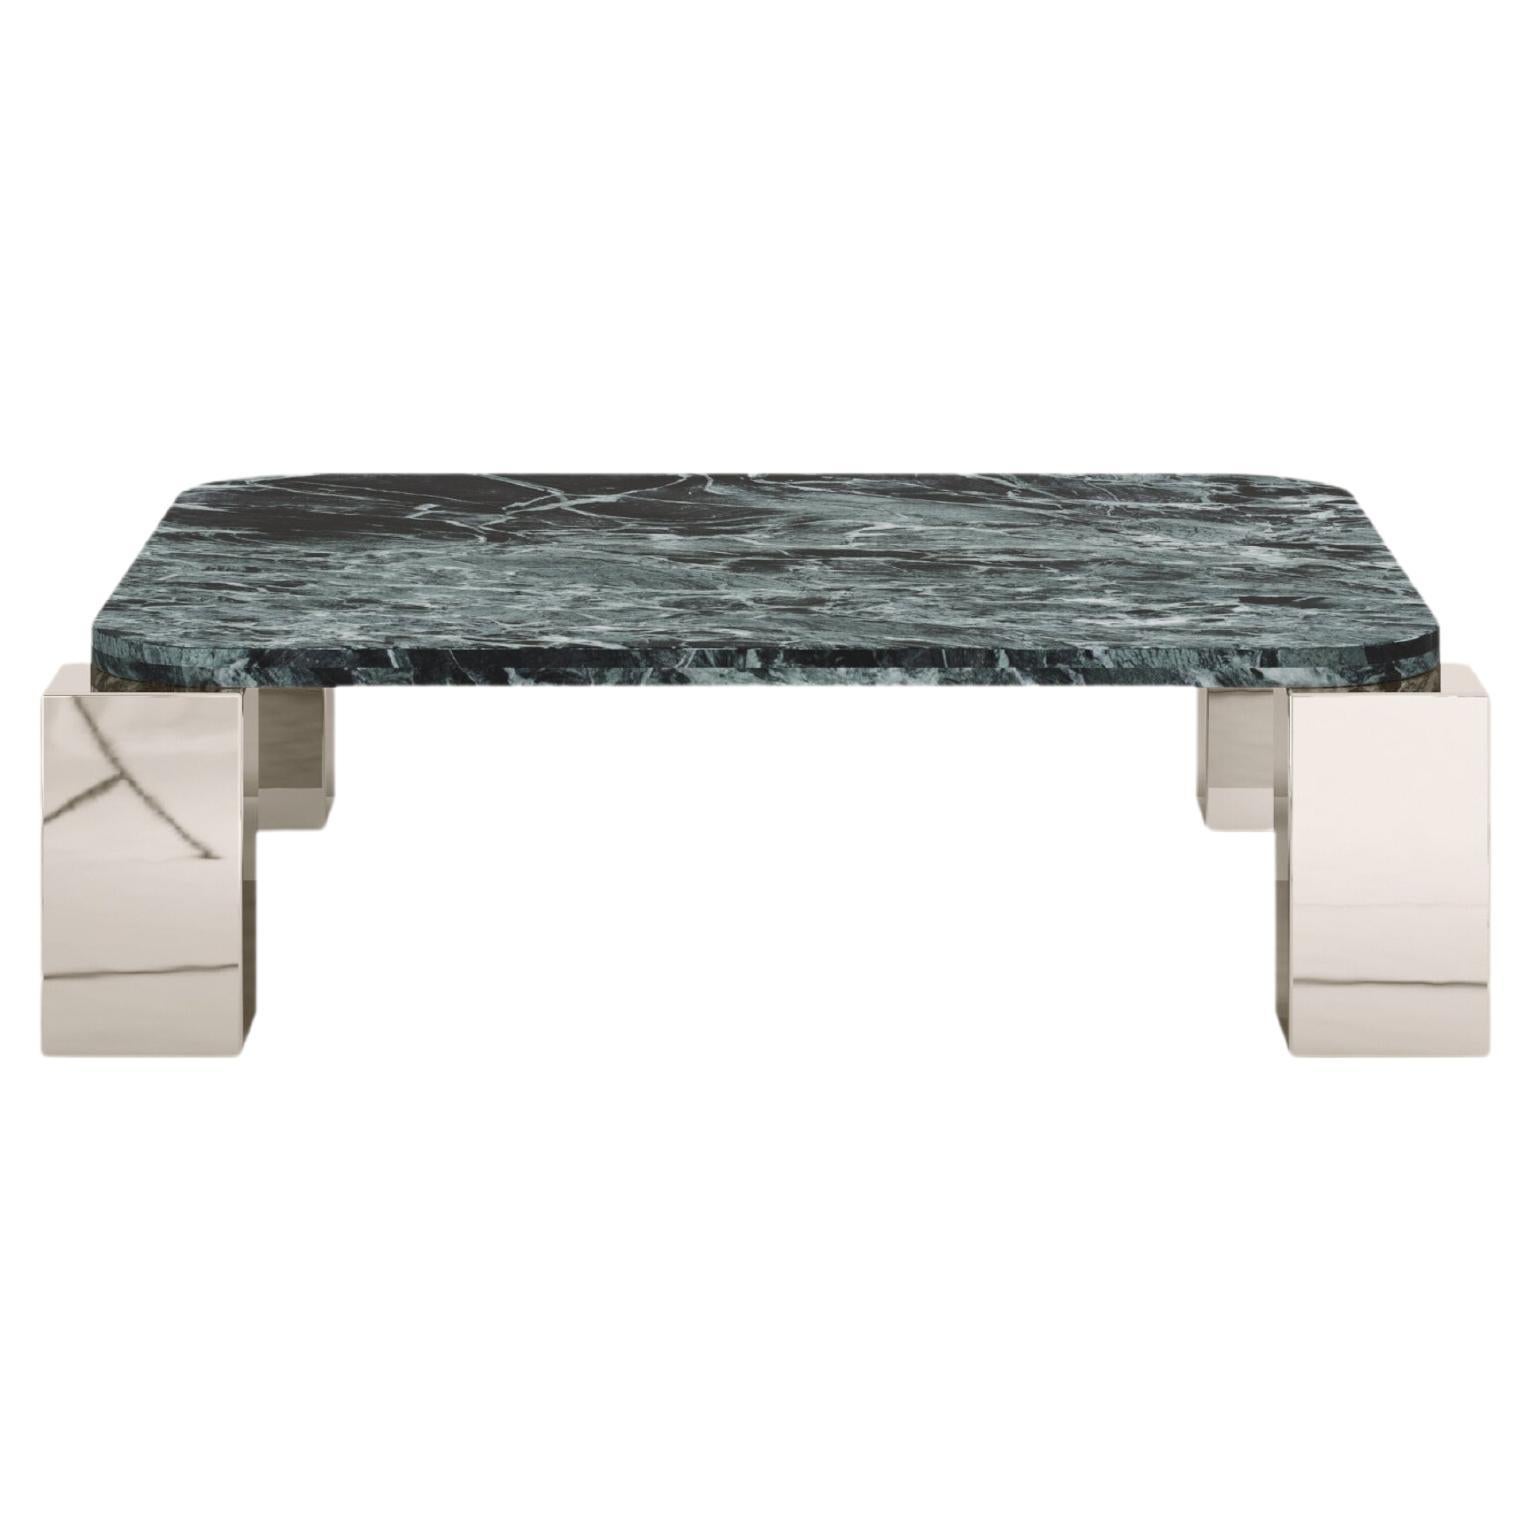 FORM(LA) Cubo Square Coffee Table 62”L x 62"W x 14”H Verde Alpi Marble & Chrome For Sale